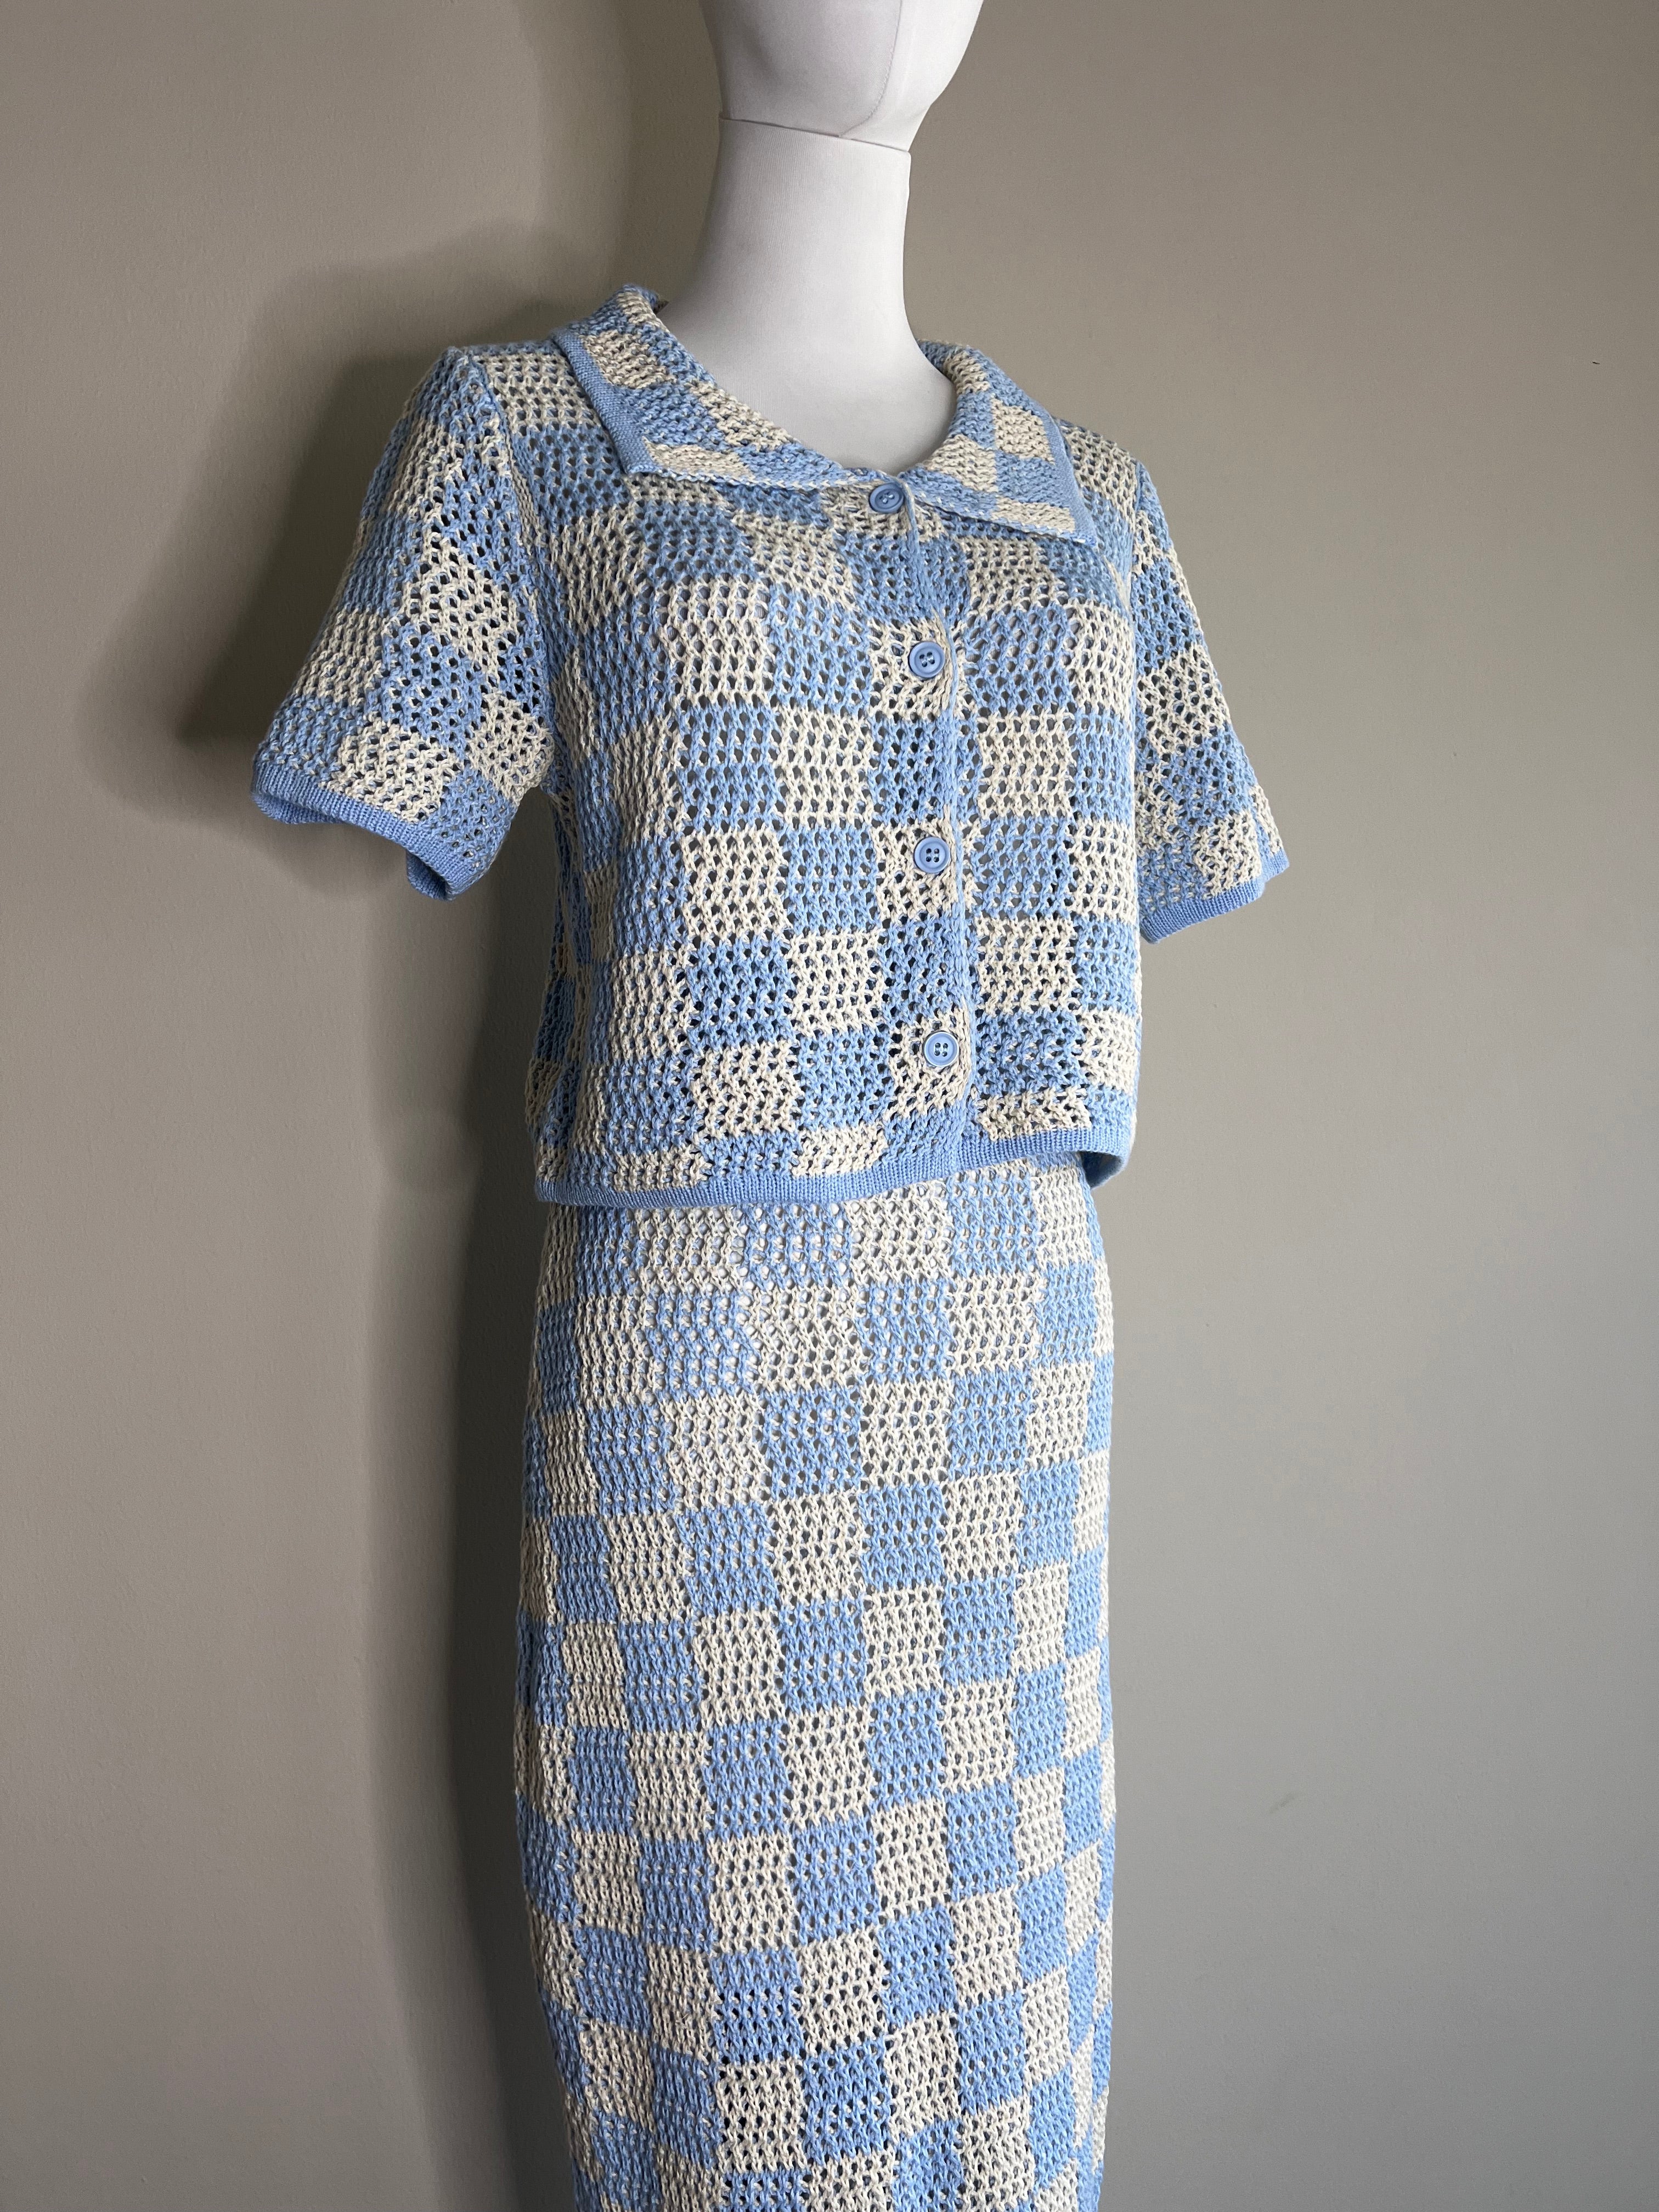 A set of Blue Check Xiara Crochet center buttons with skirt - XIARA